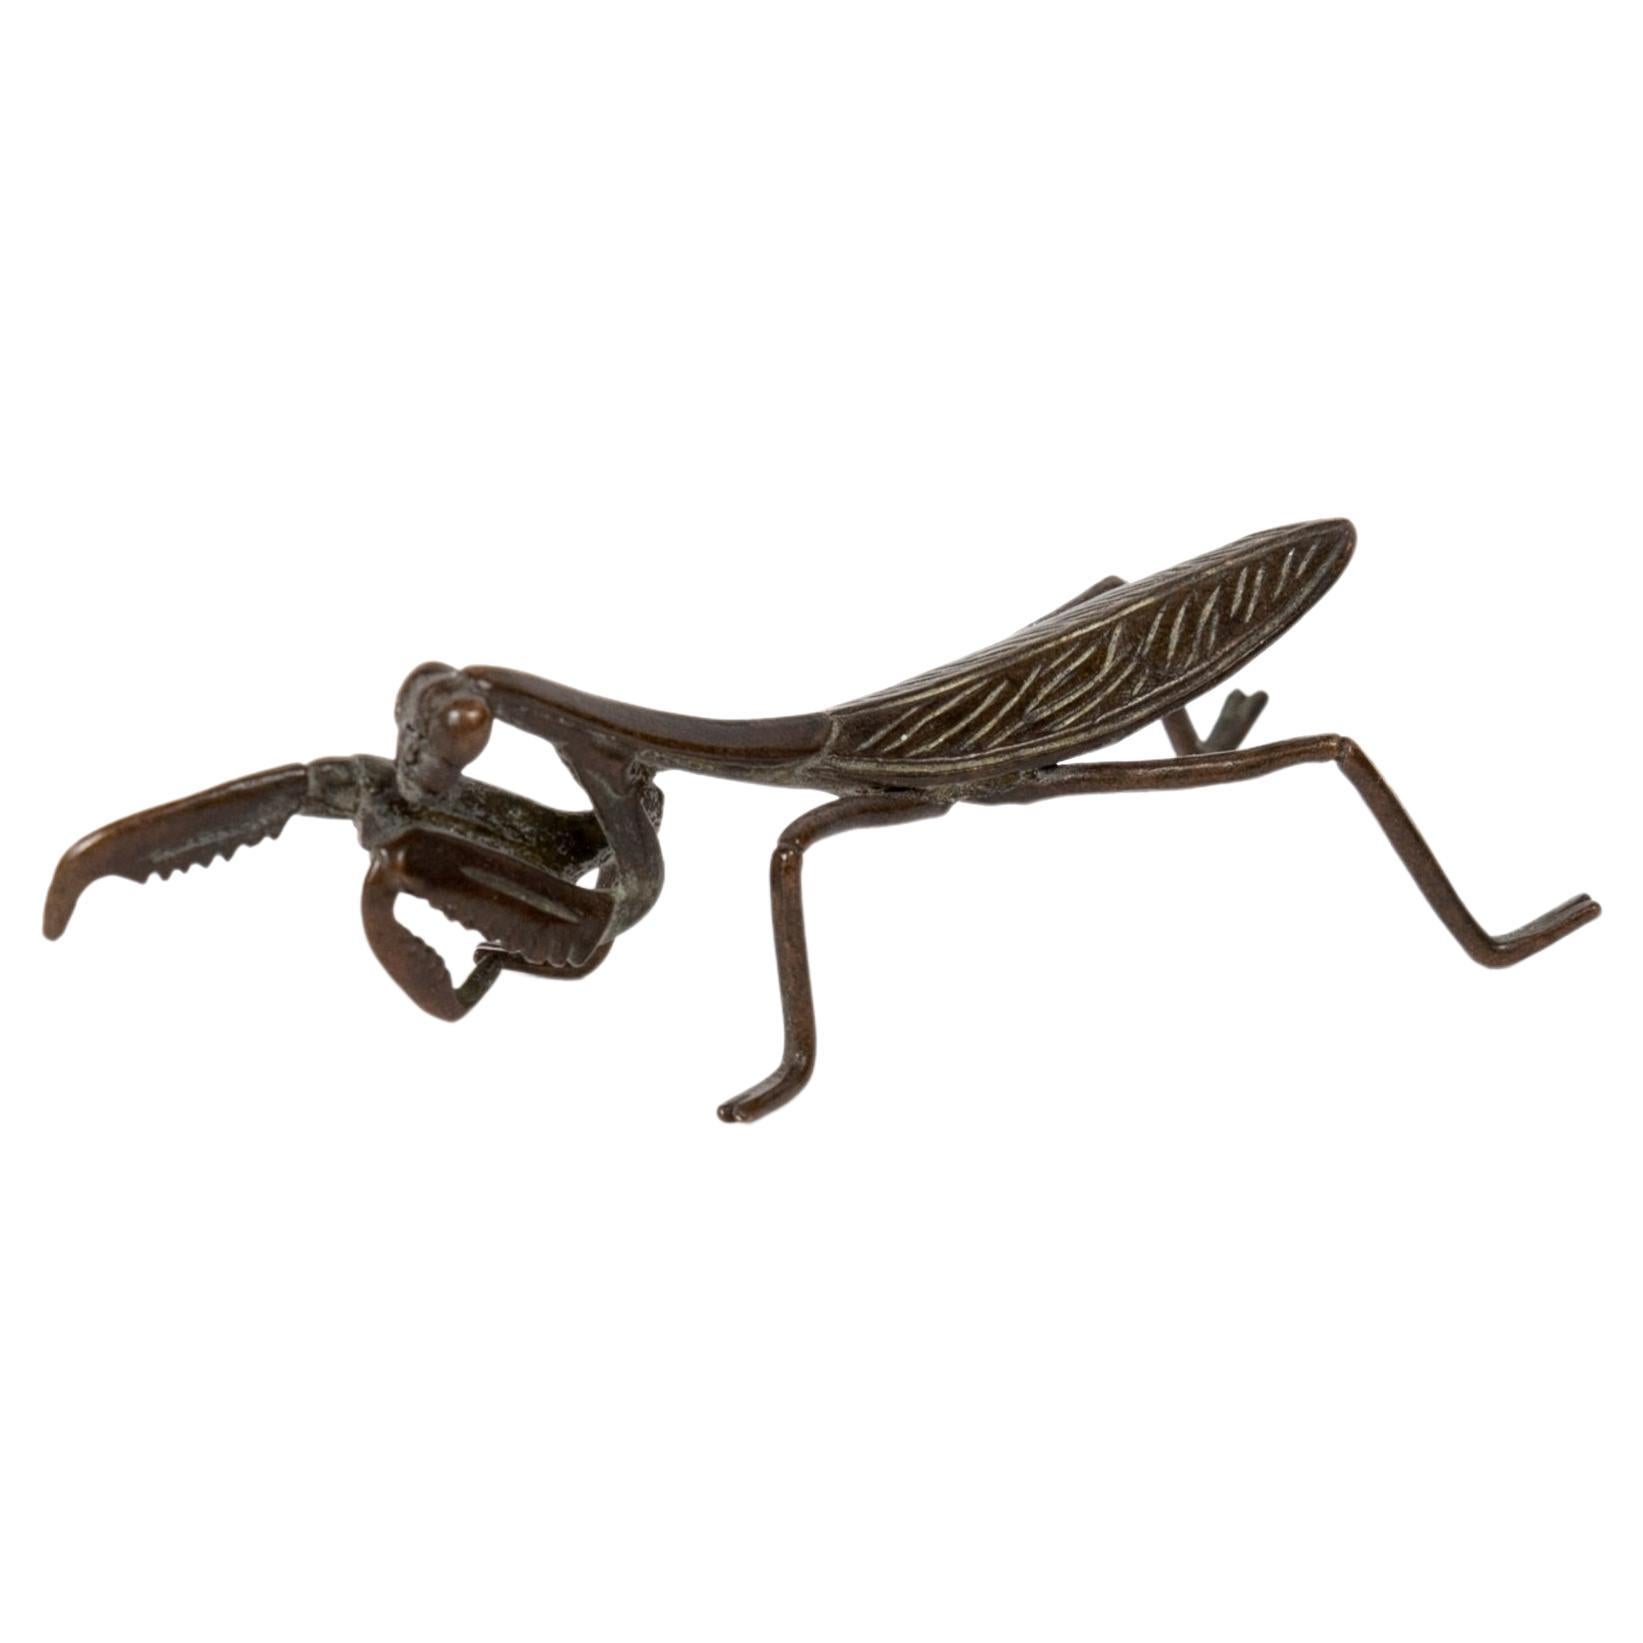 Japan bronze praying mantis insect sculpture okimono Meiji